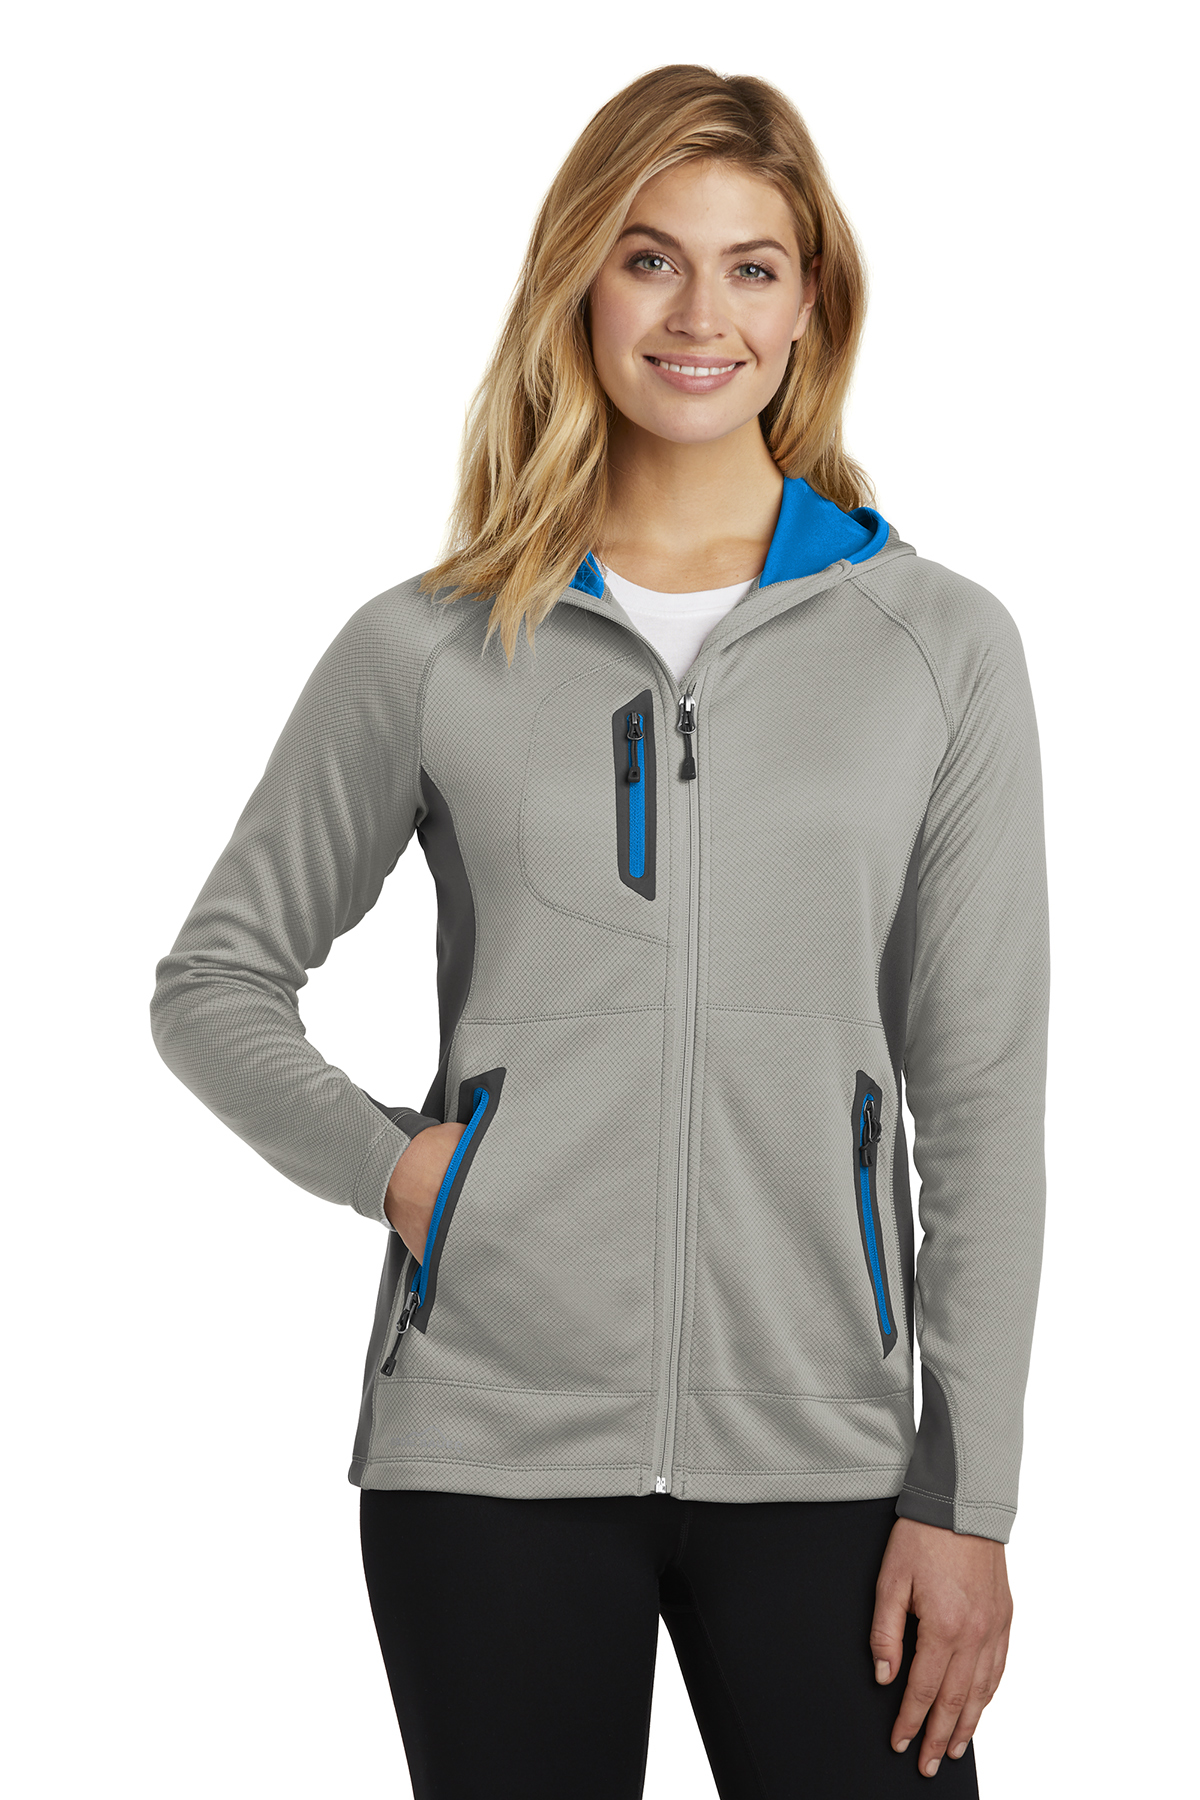 Stamboom Minimaliseren lucht Eddie Bauer Ladies Sport Hooded Full-Zip Fleece Jacket | Product | SanMar